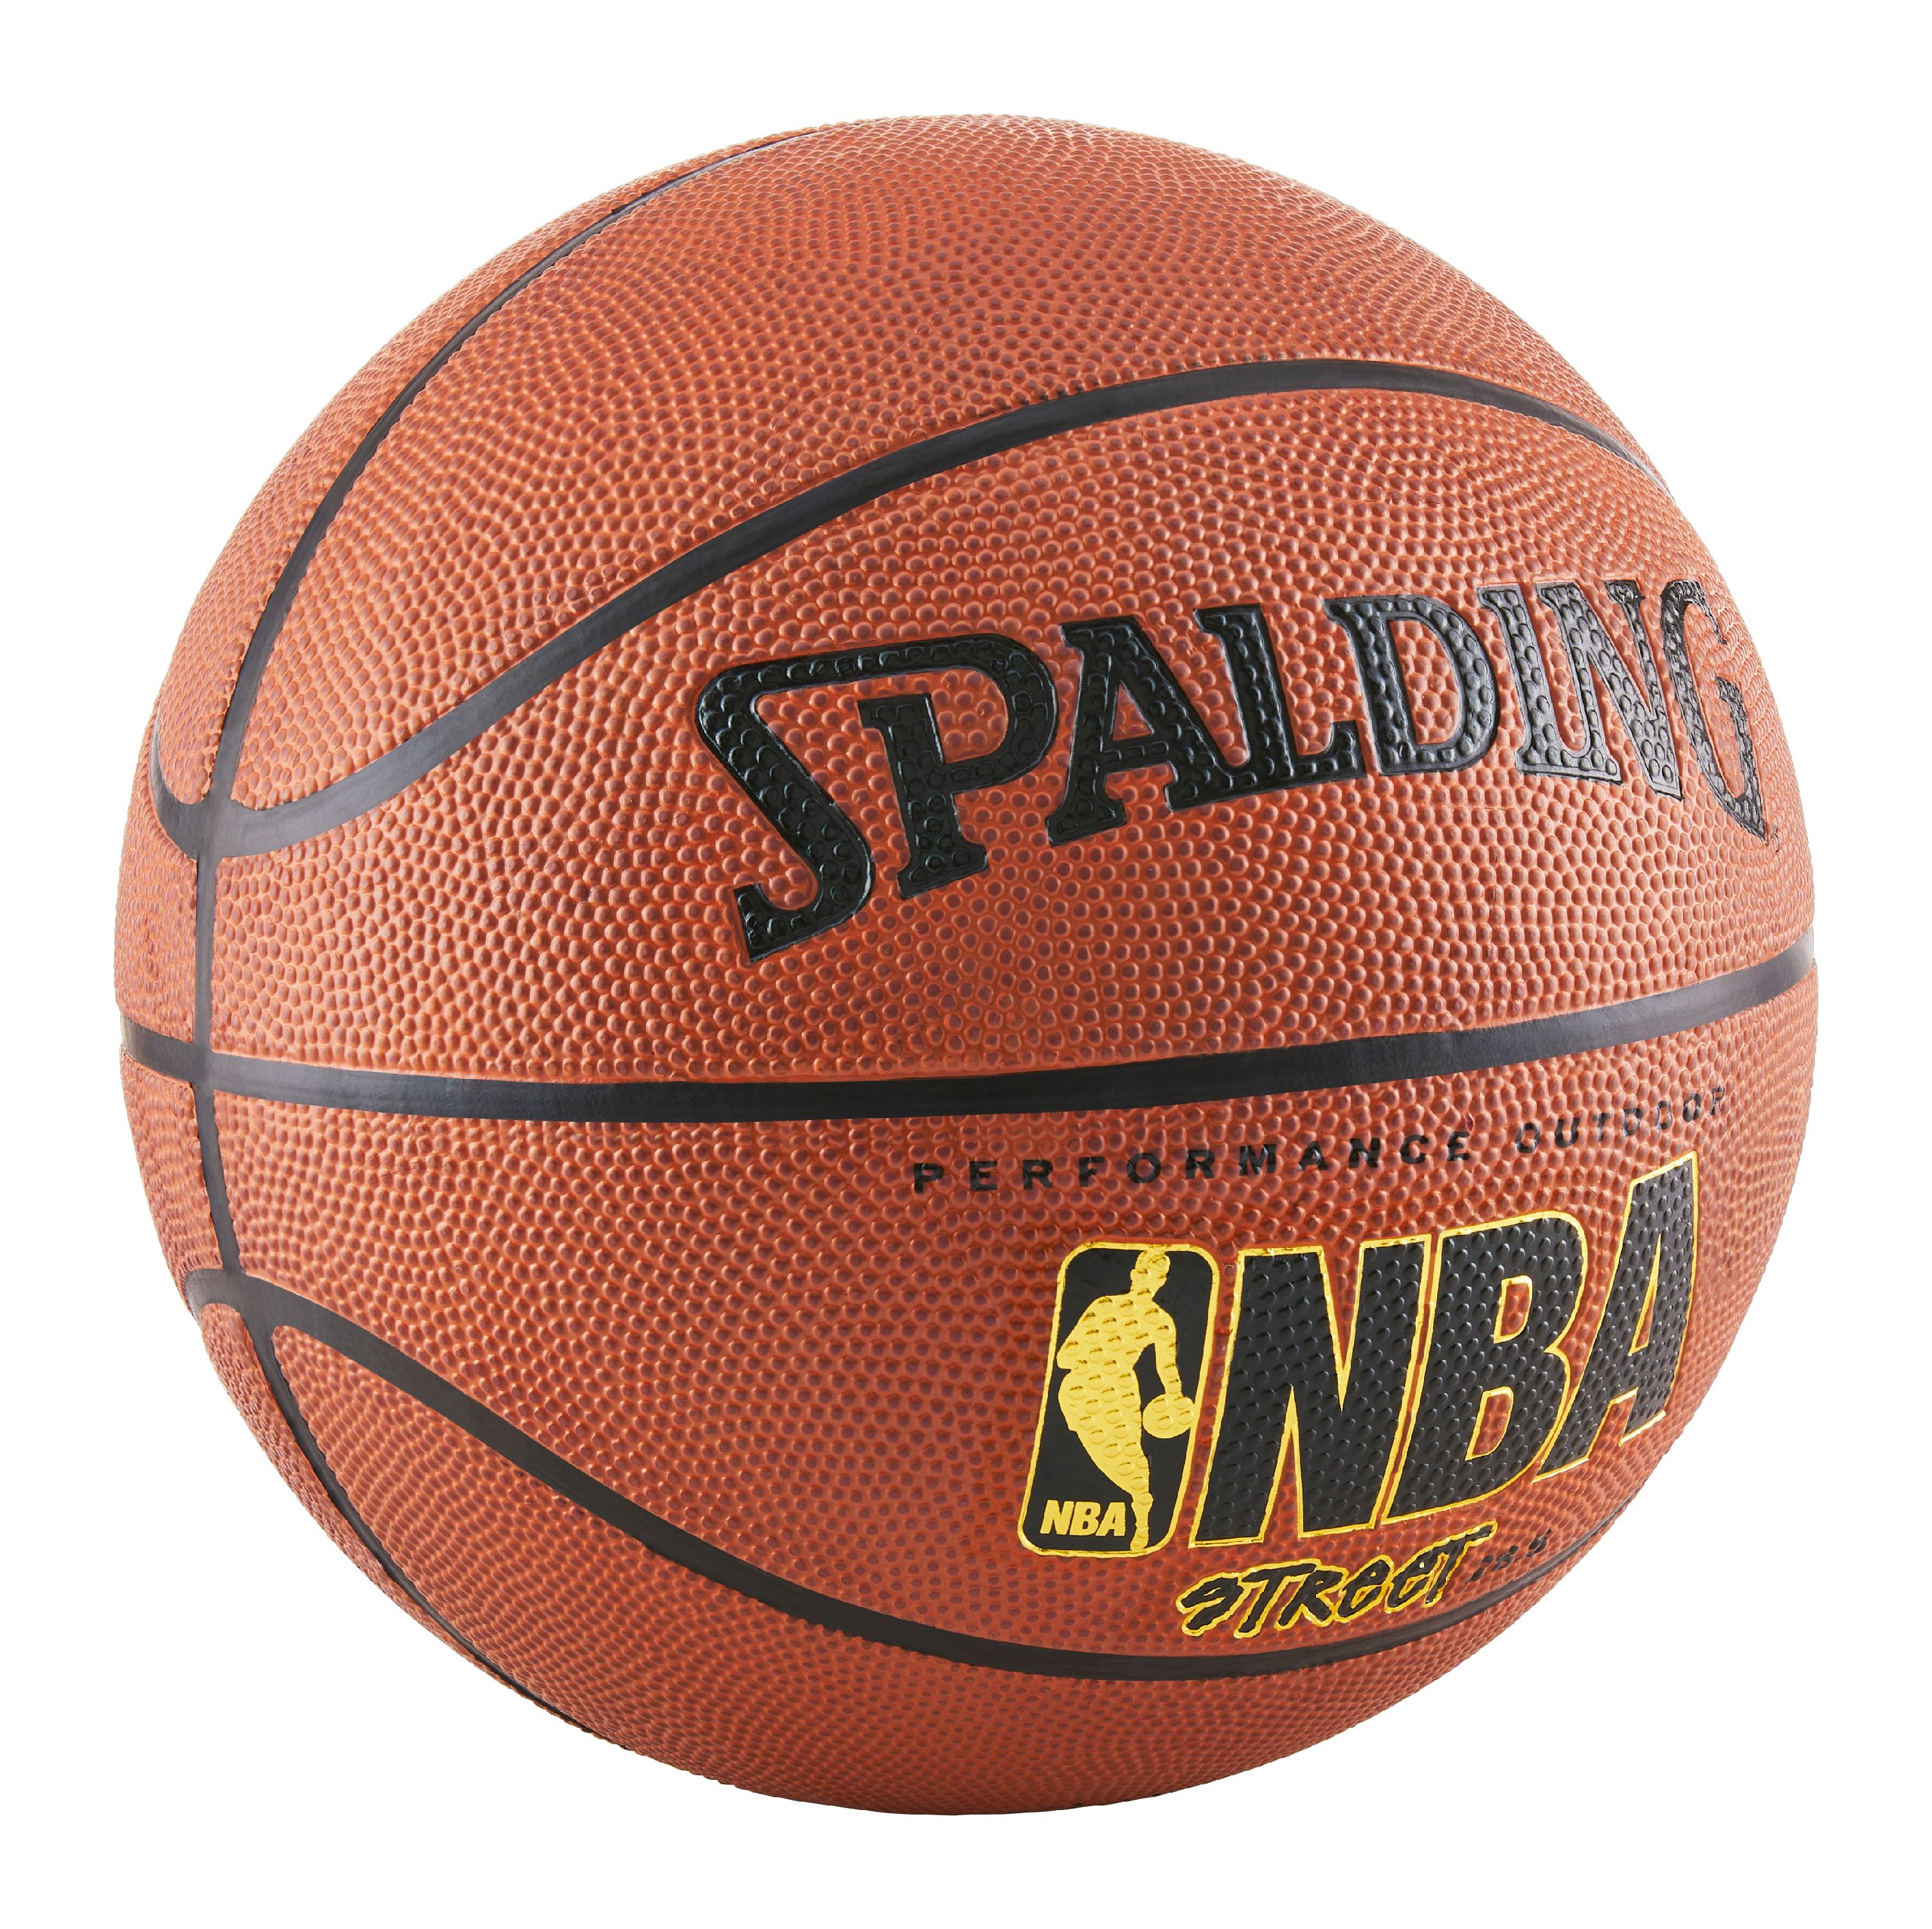 Spalding NBA Street Outdoor Basketball, Intermediate Size 6 (28.5?) - image 3 of 4